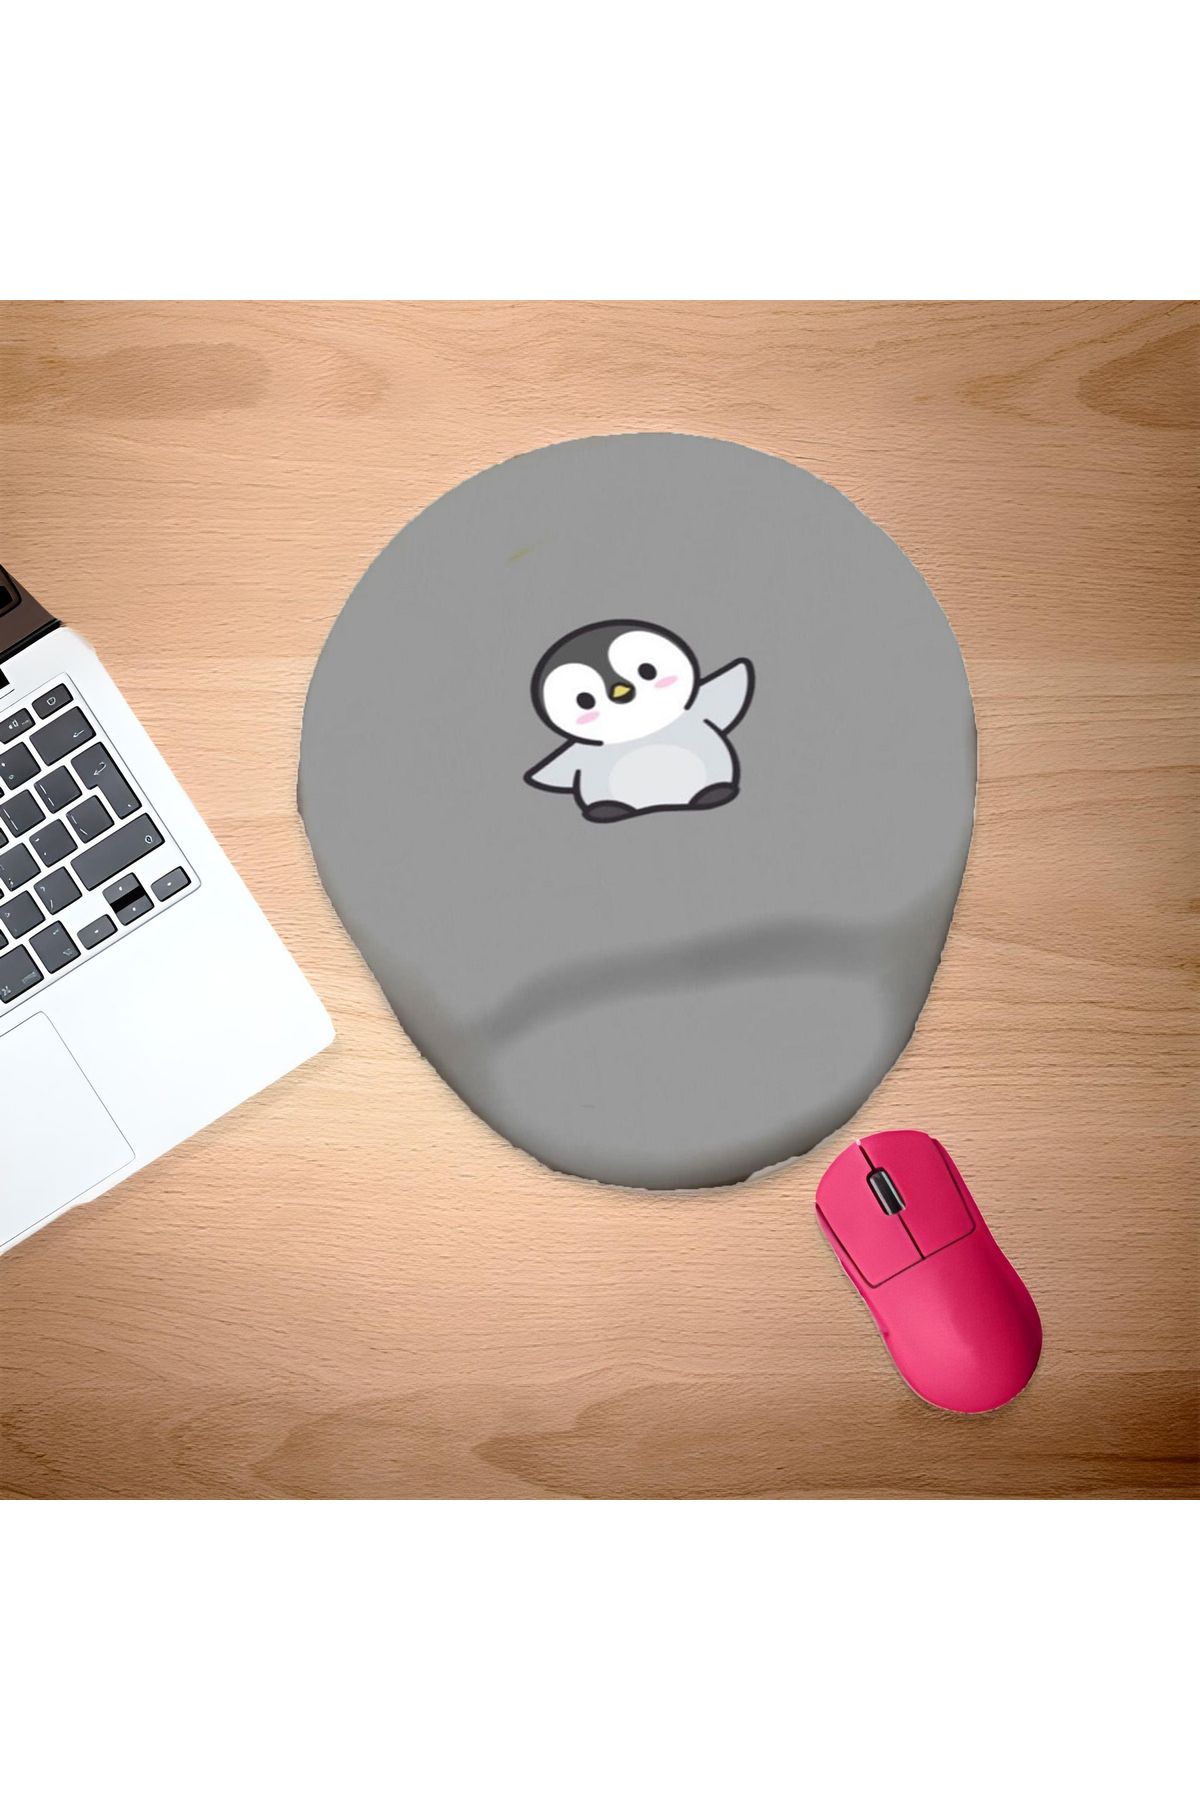 UcuruStore Sevimli Minik Penguen Bilek Destekli Mouse Pad